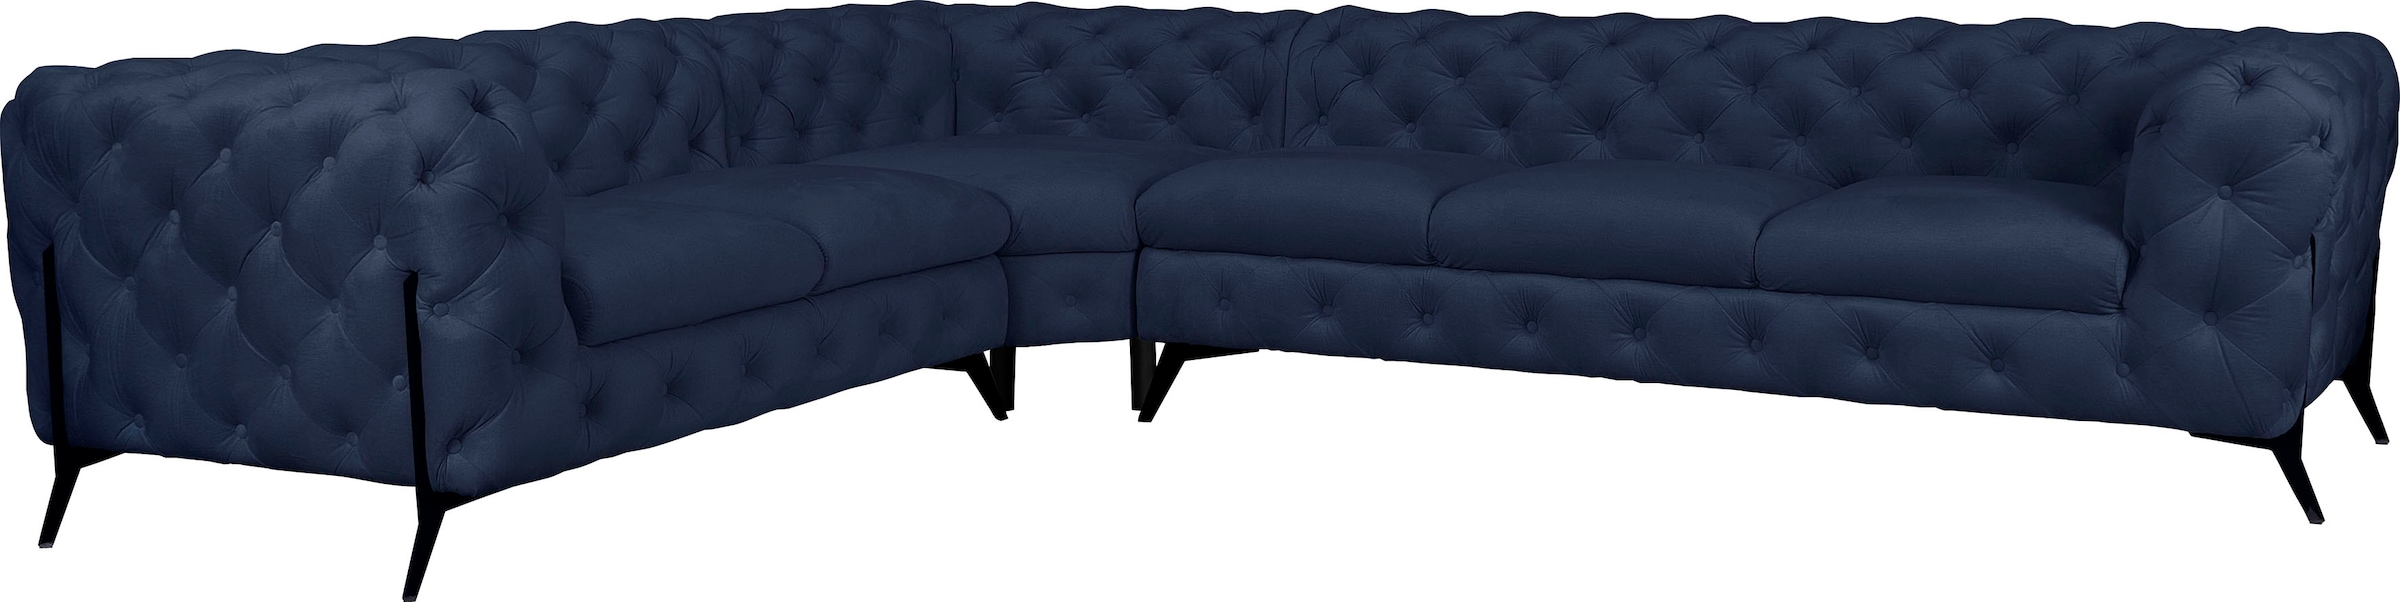 Chesterfield-Sofa »Amaury L-Form«, großes Ecksofa, Chesterfield-Optik, Breite 323 cm,...